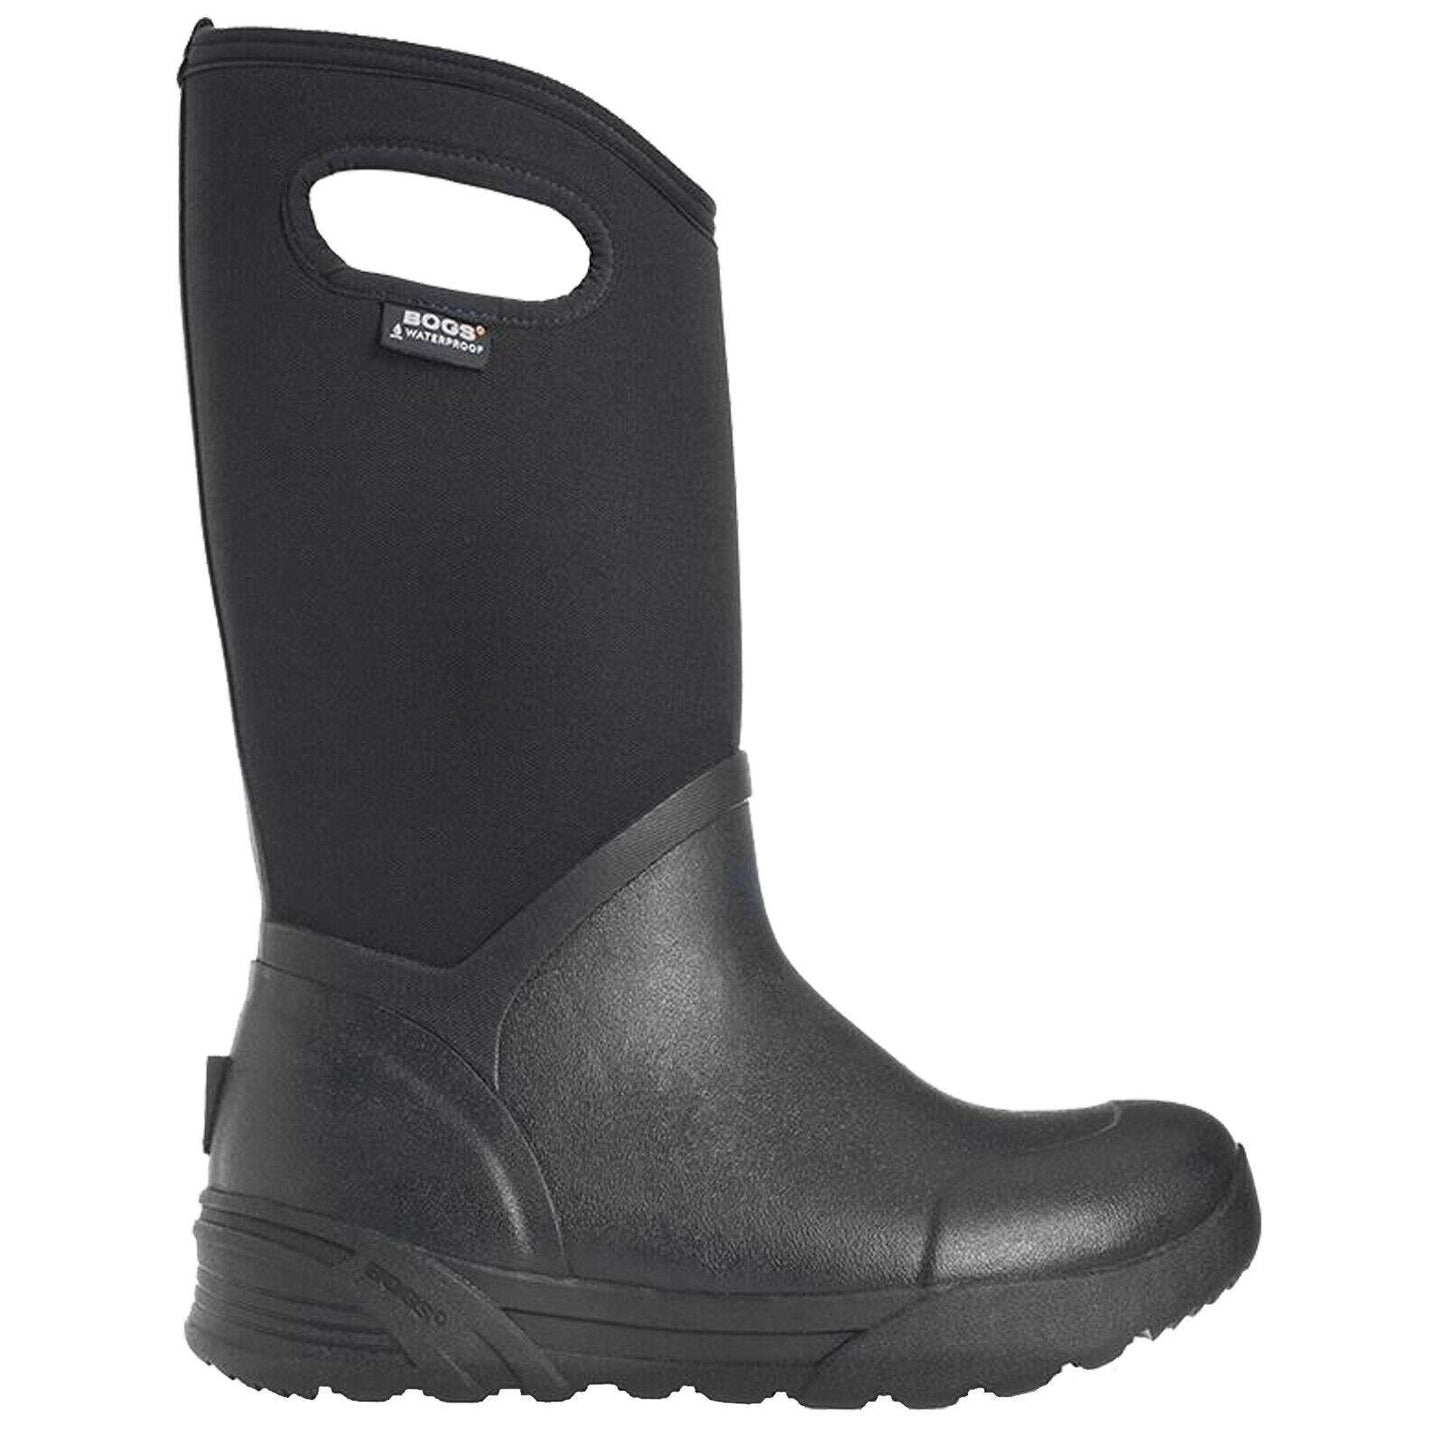 Mens Bogs Bozeman Tall Black Insulated Waterproof Warm Wellington Boots